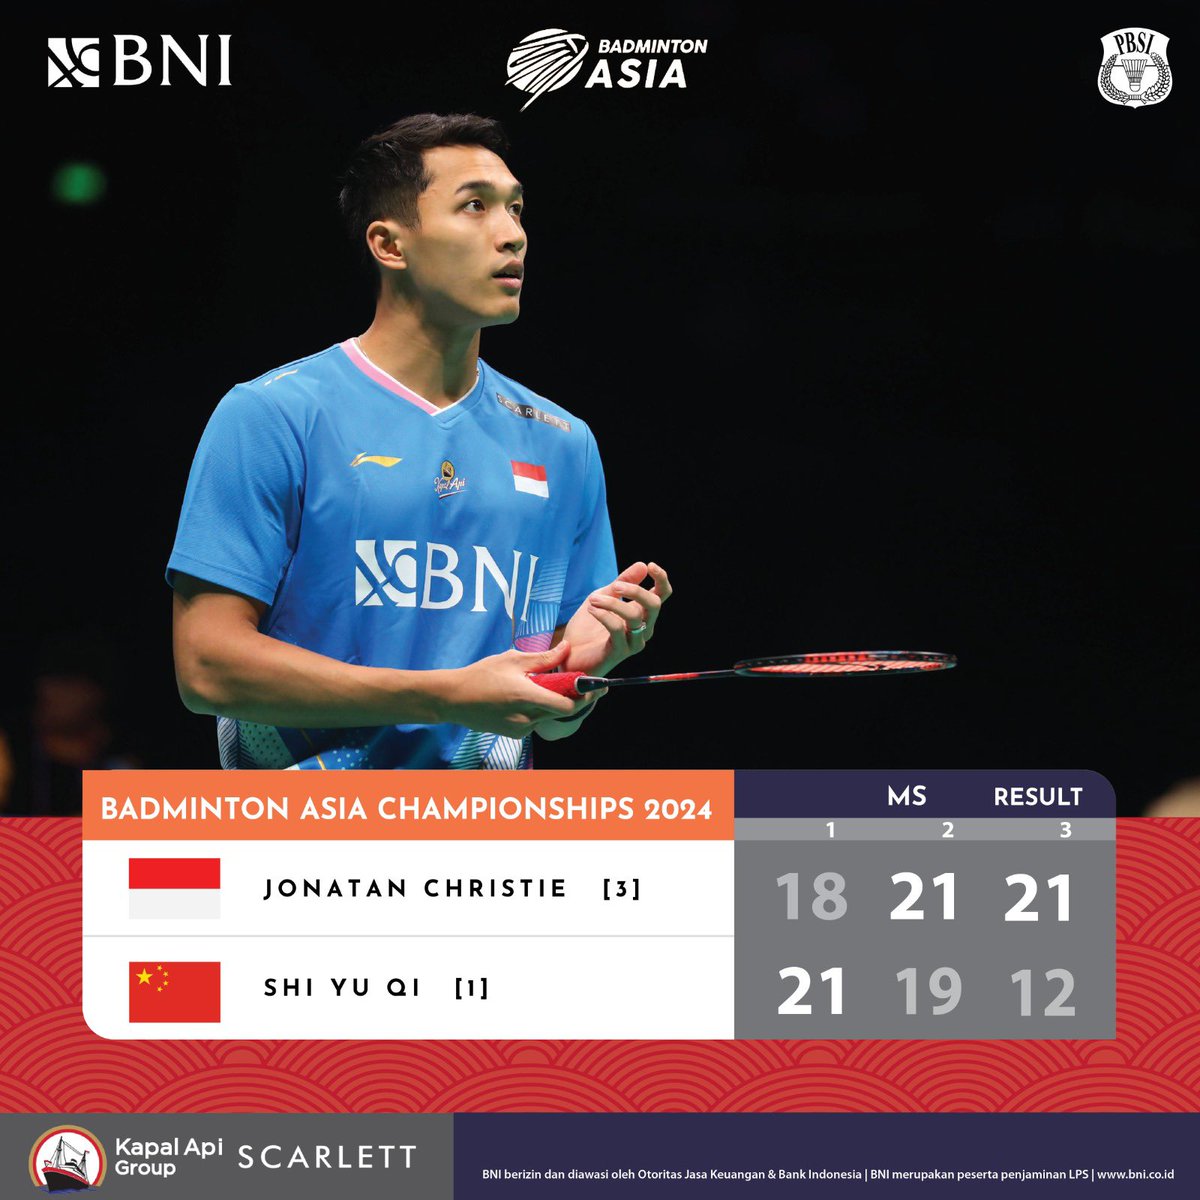 Jonatan Christie ke final Badminton Asia Championships 2024 usai menangi drama rubber game atas unggulan pertama asal Tiongkok. 

Semangat Jojo, ayo rebut juara!!💯🔥🇮🇩

#BadmintonIndonesia
#badmintonasiachampionships2024
#KitaIndonesia
#MenjagaMerahPutih…